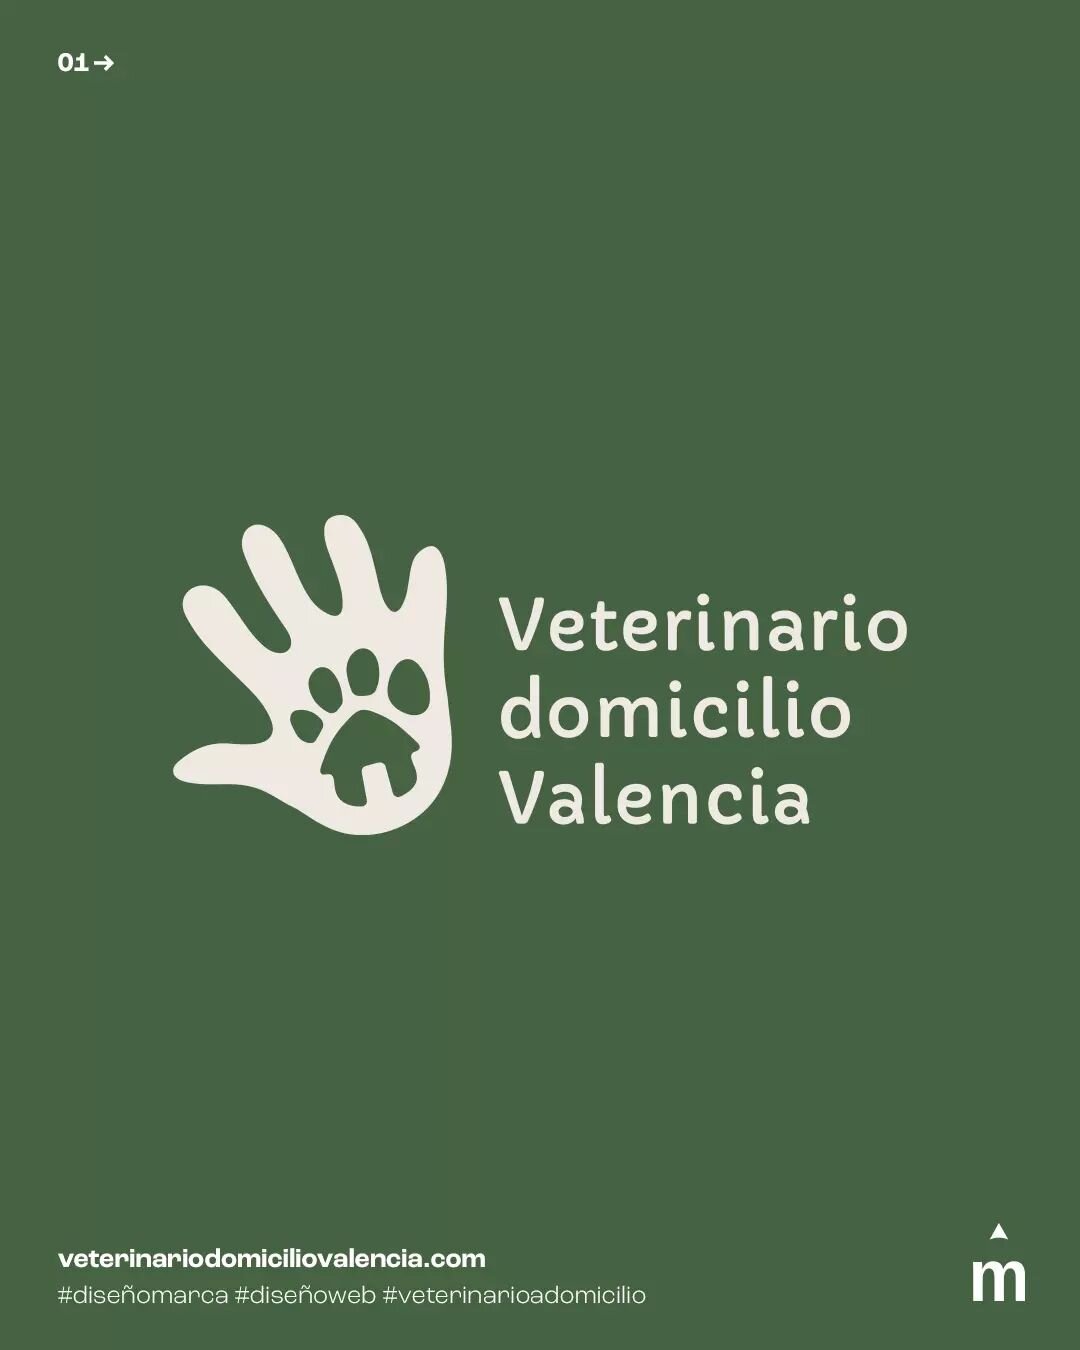 BRANDING/ Veterinario domicilio Valencia
.
🐶Todo para tu mascota, sin salir de casa
. 
👉 @veterinariodomiciliovalencia
.
.
#dise&ntilde;o #grafico #creativedesign #freelancedesigner #graphicdesign #dise&ntilde;ogr&aacute;fico #branding #brandidenti